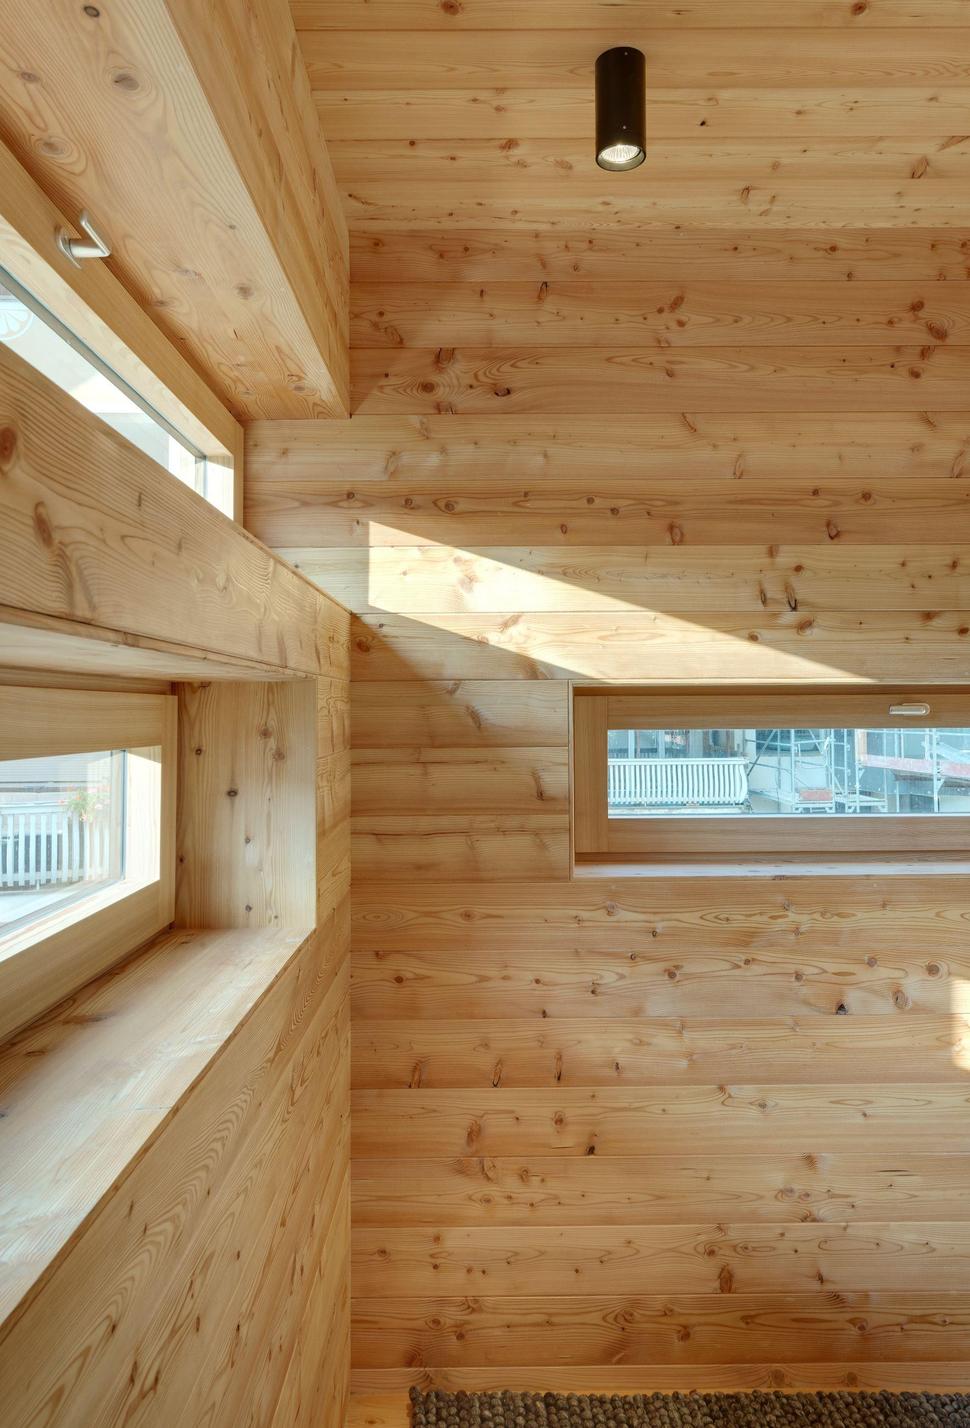 tiny-barn-conversion-zigzags-rooms-vertically-10-interior.jpg